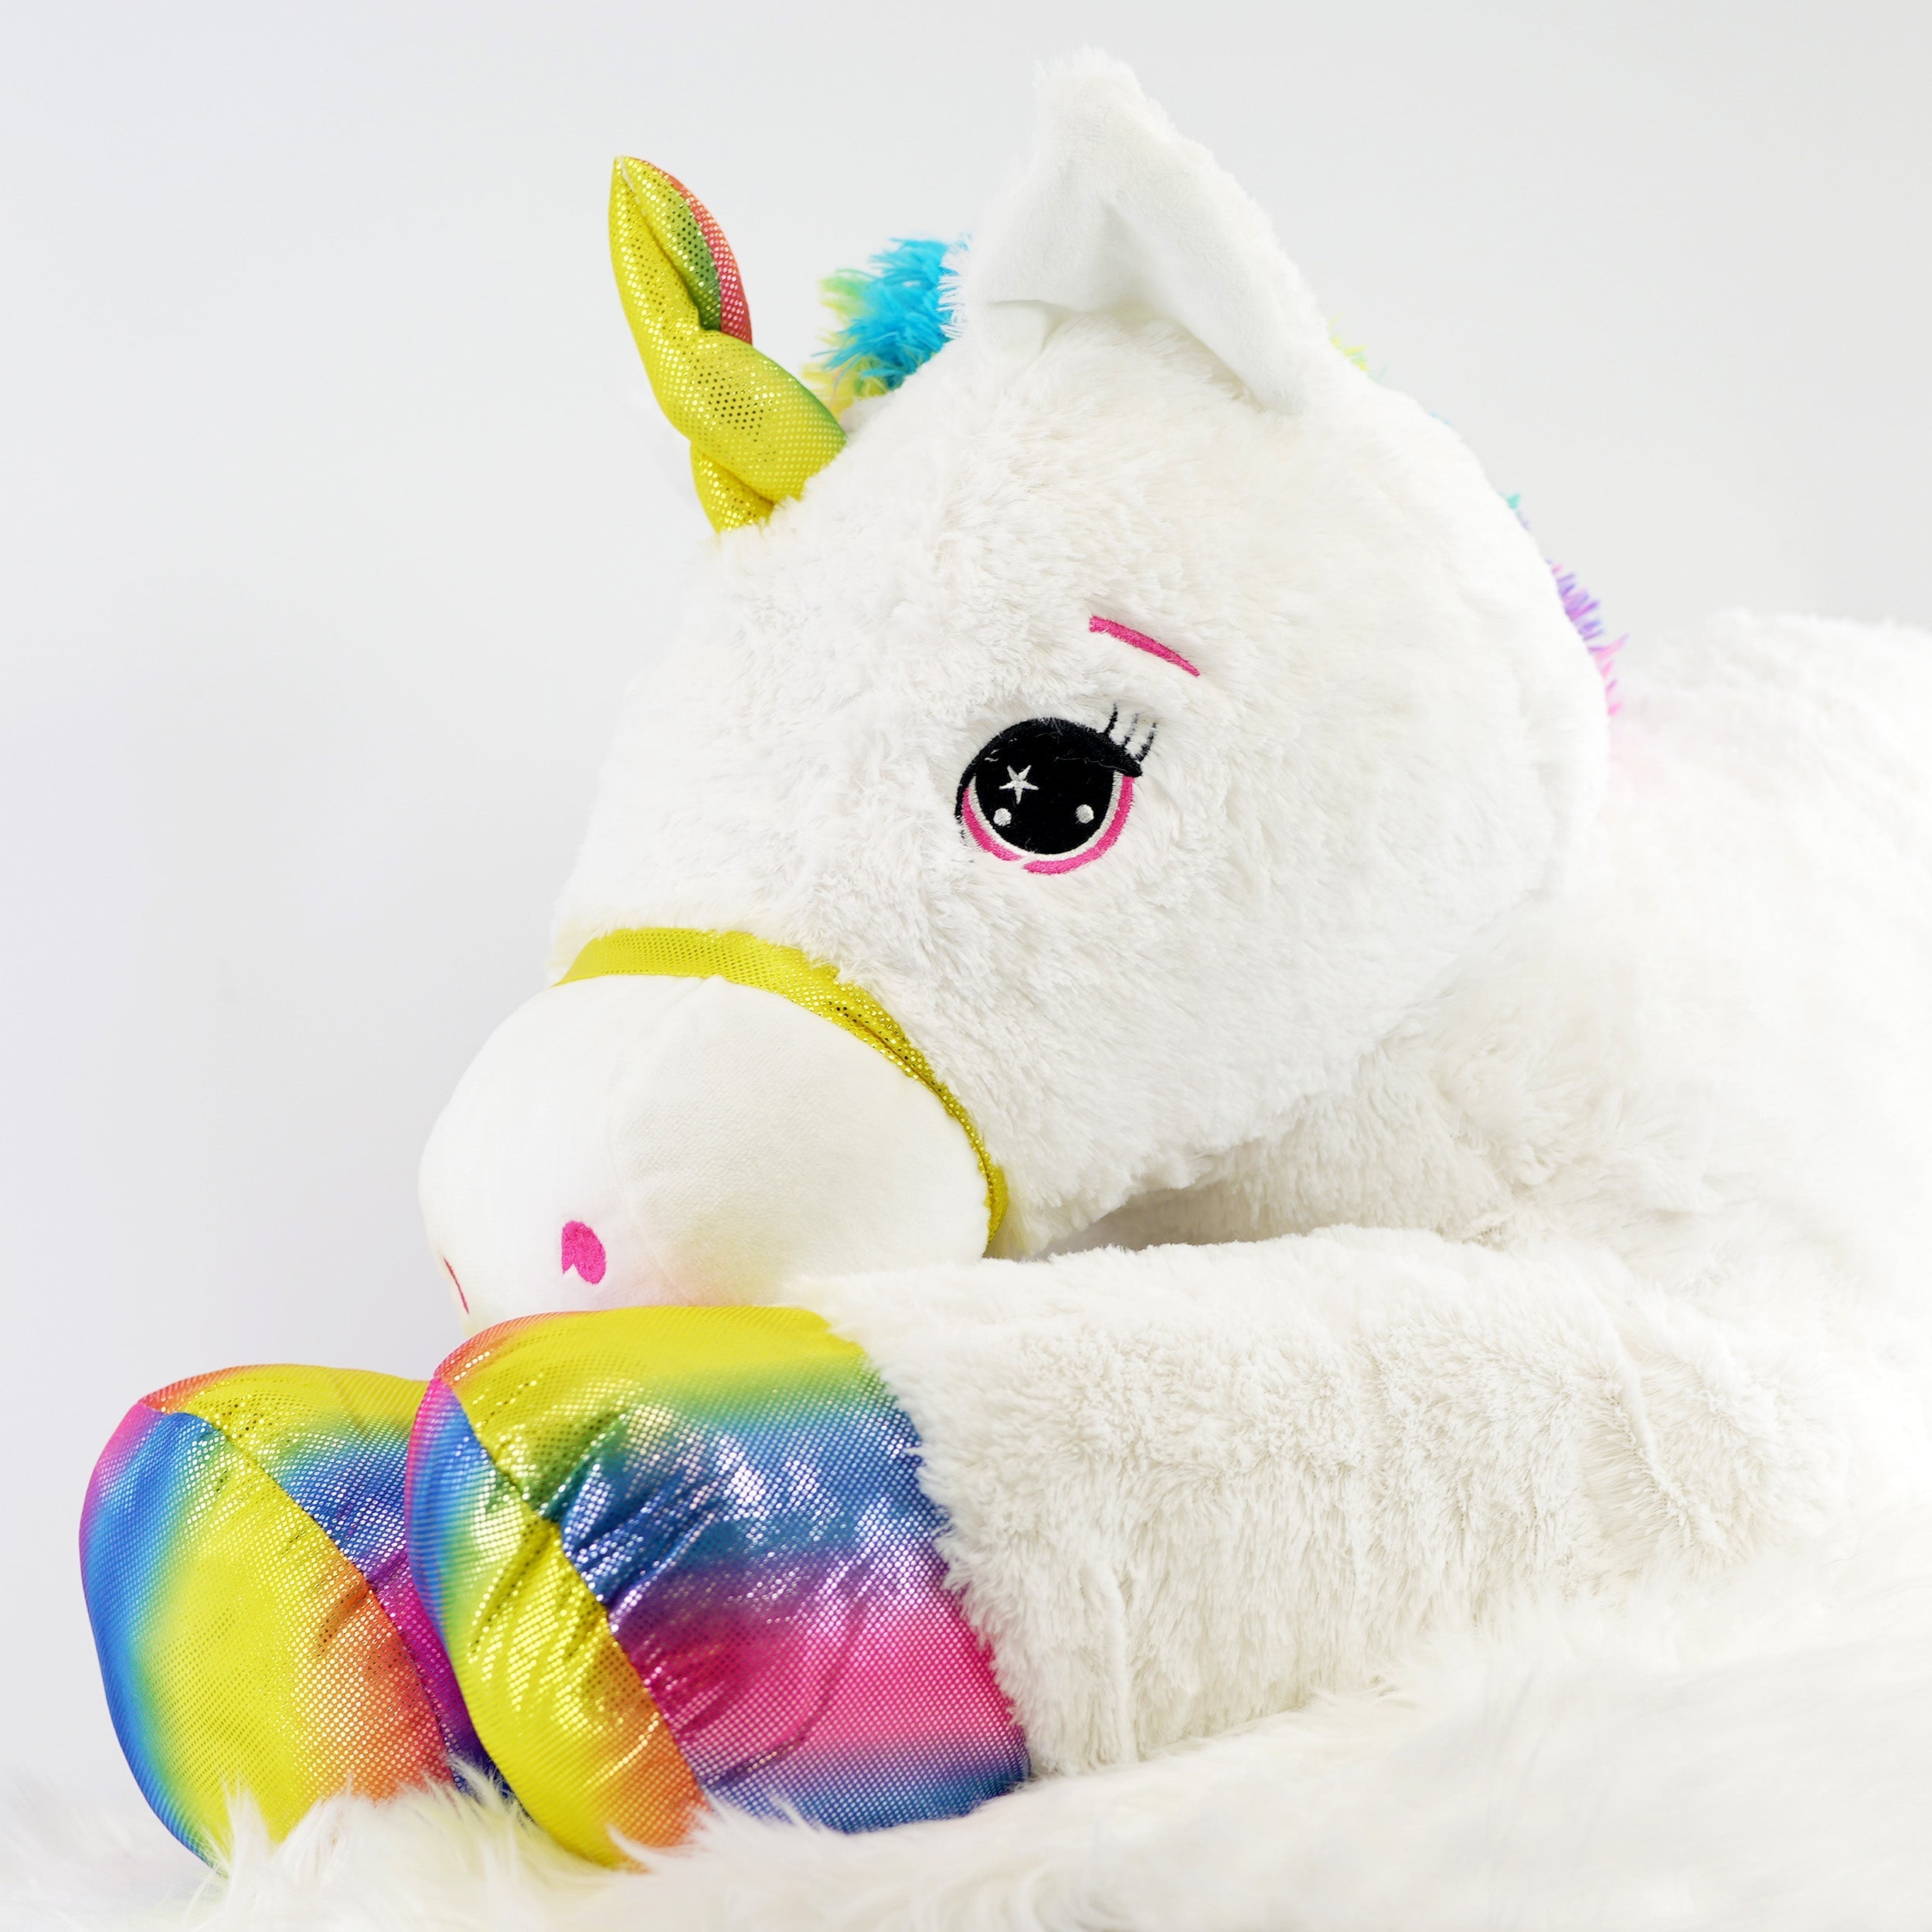 The Magic Toy Shop Soft Toy Giant Lying Stuffed Unicorn Soft Toy, 42"